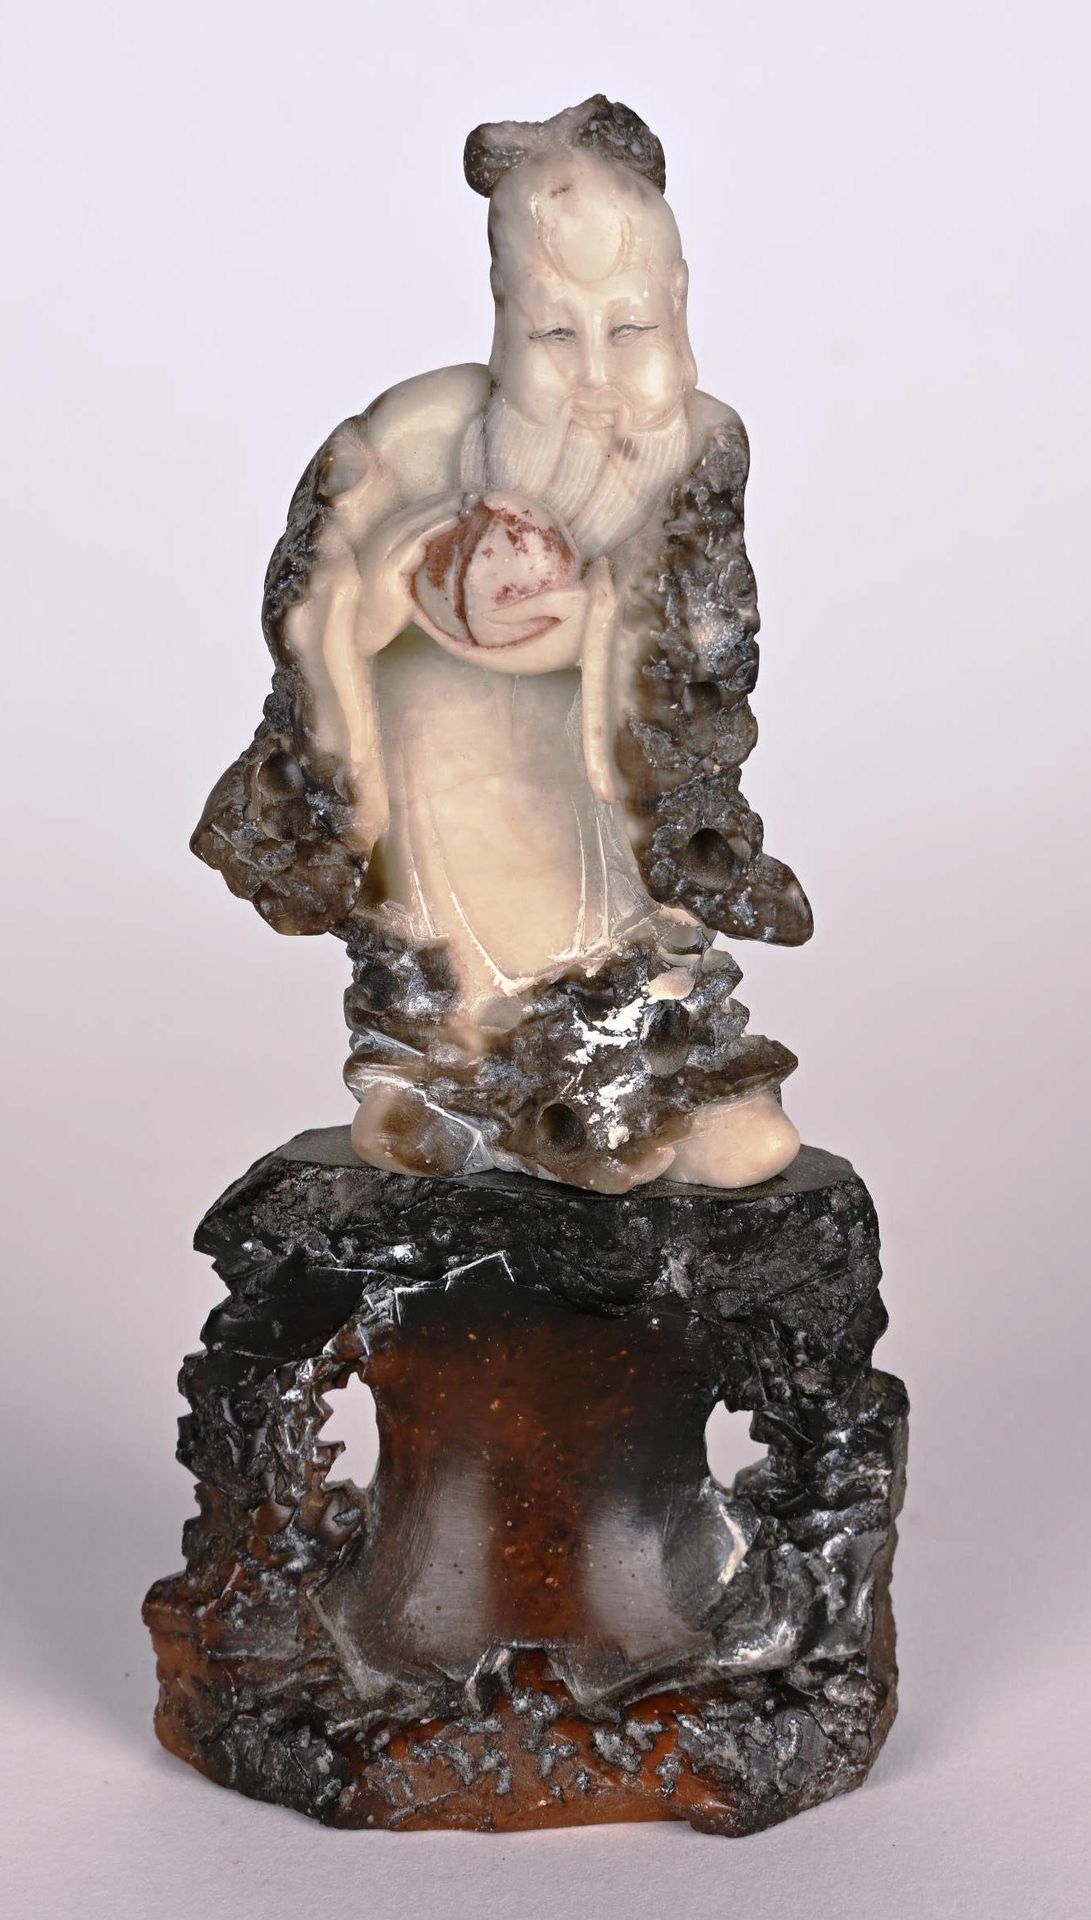 Sculpture en jadéite d'un sage CHINA.

Jadeite sculpture of a wise man with a wo&hellip;